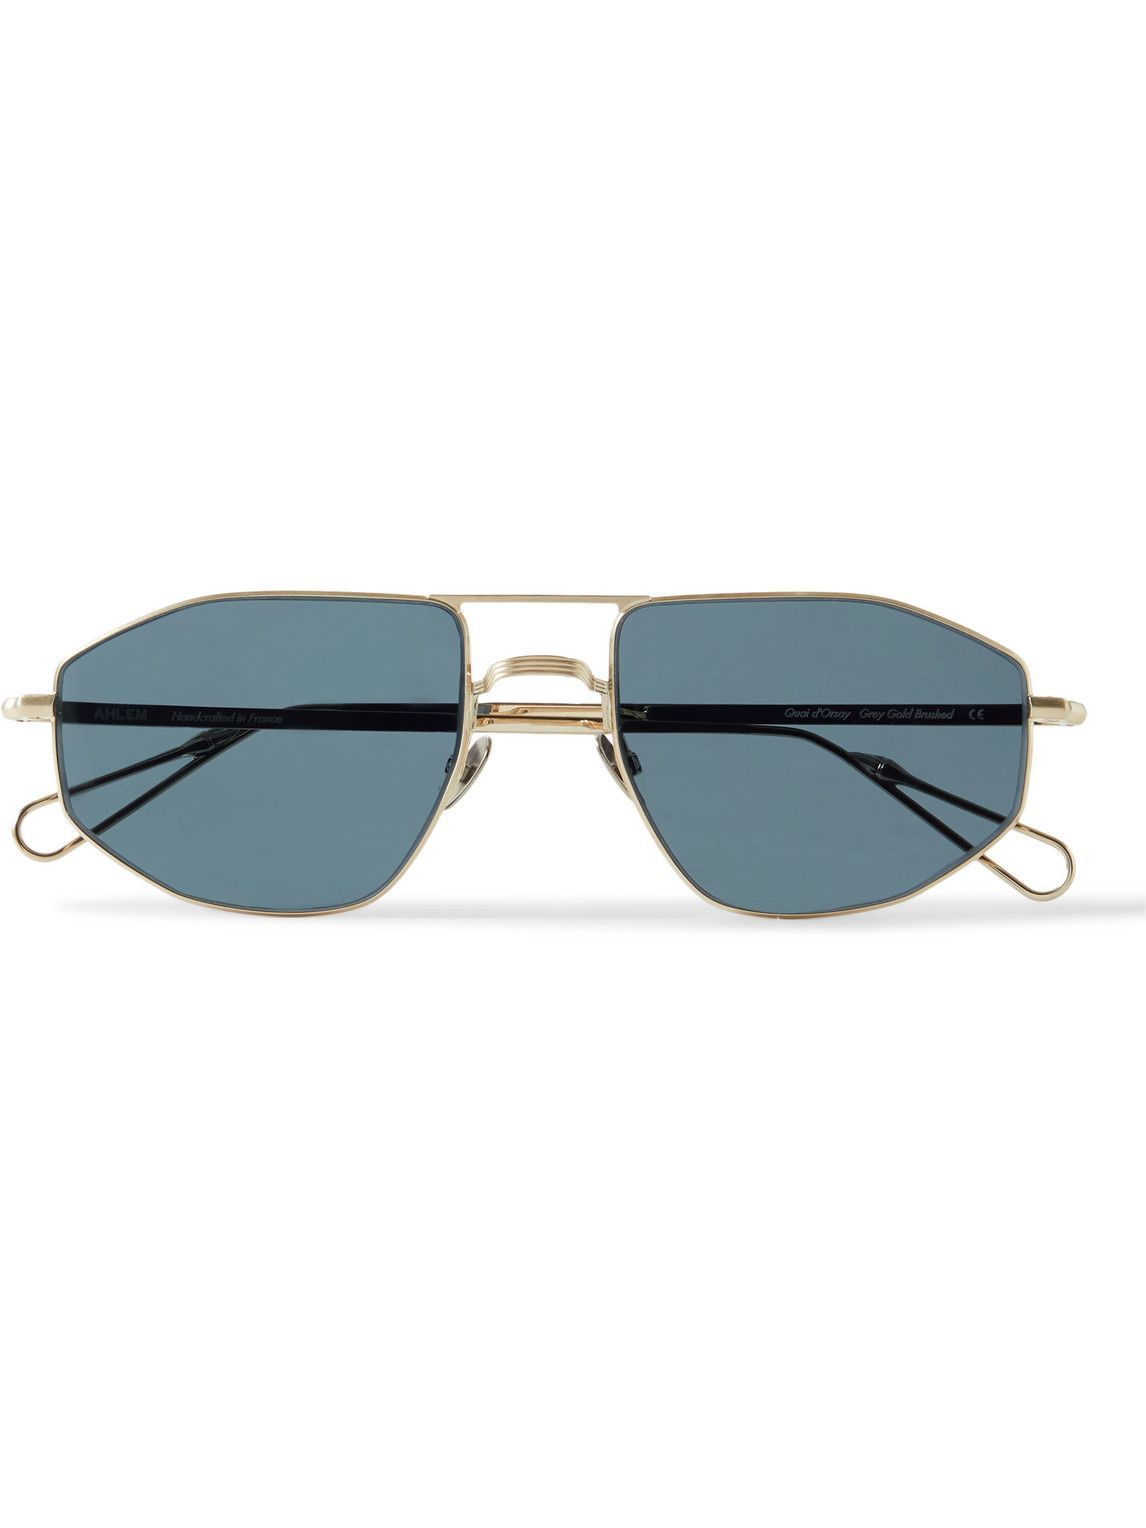 AHLEM - Quai d'Orsay Aviator-Style Gold-Plated Sunglasses